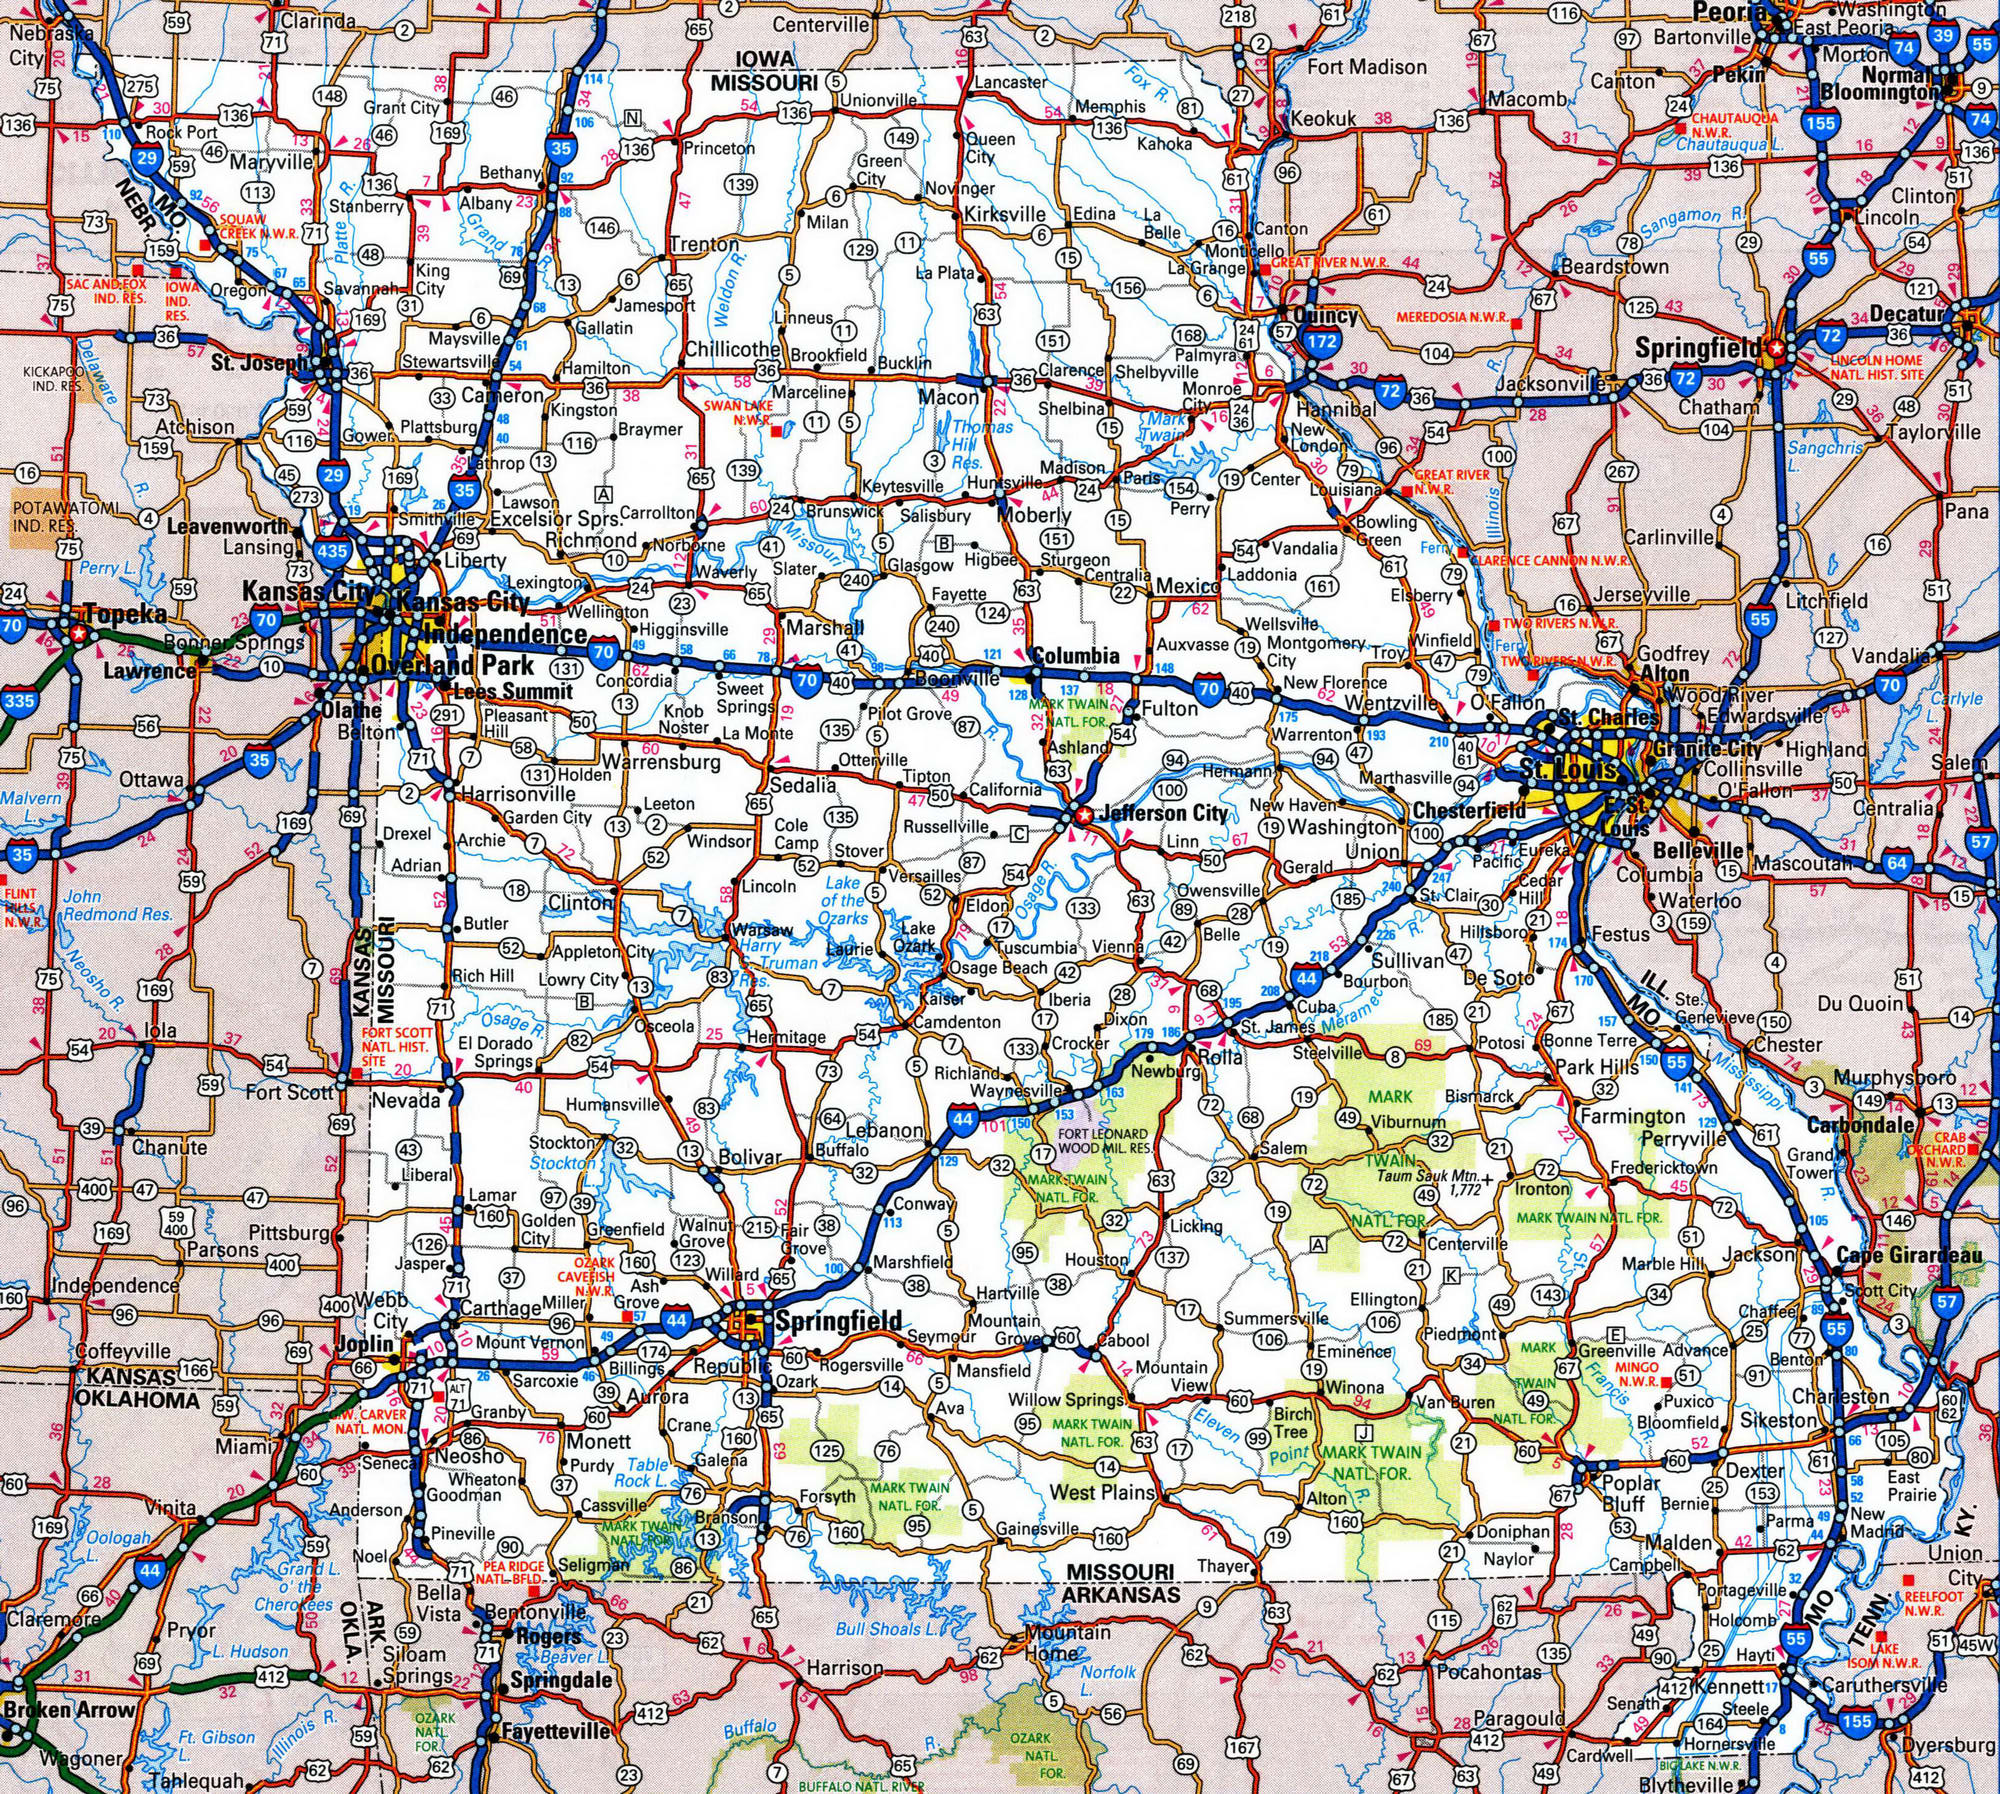 Detailed roads map of Missouri